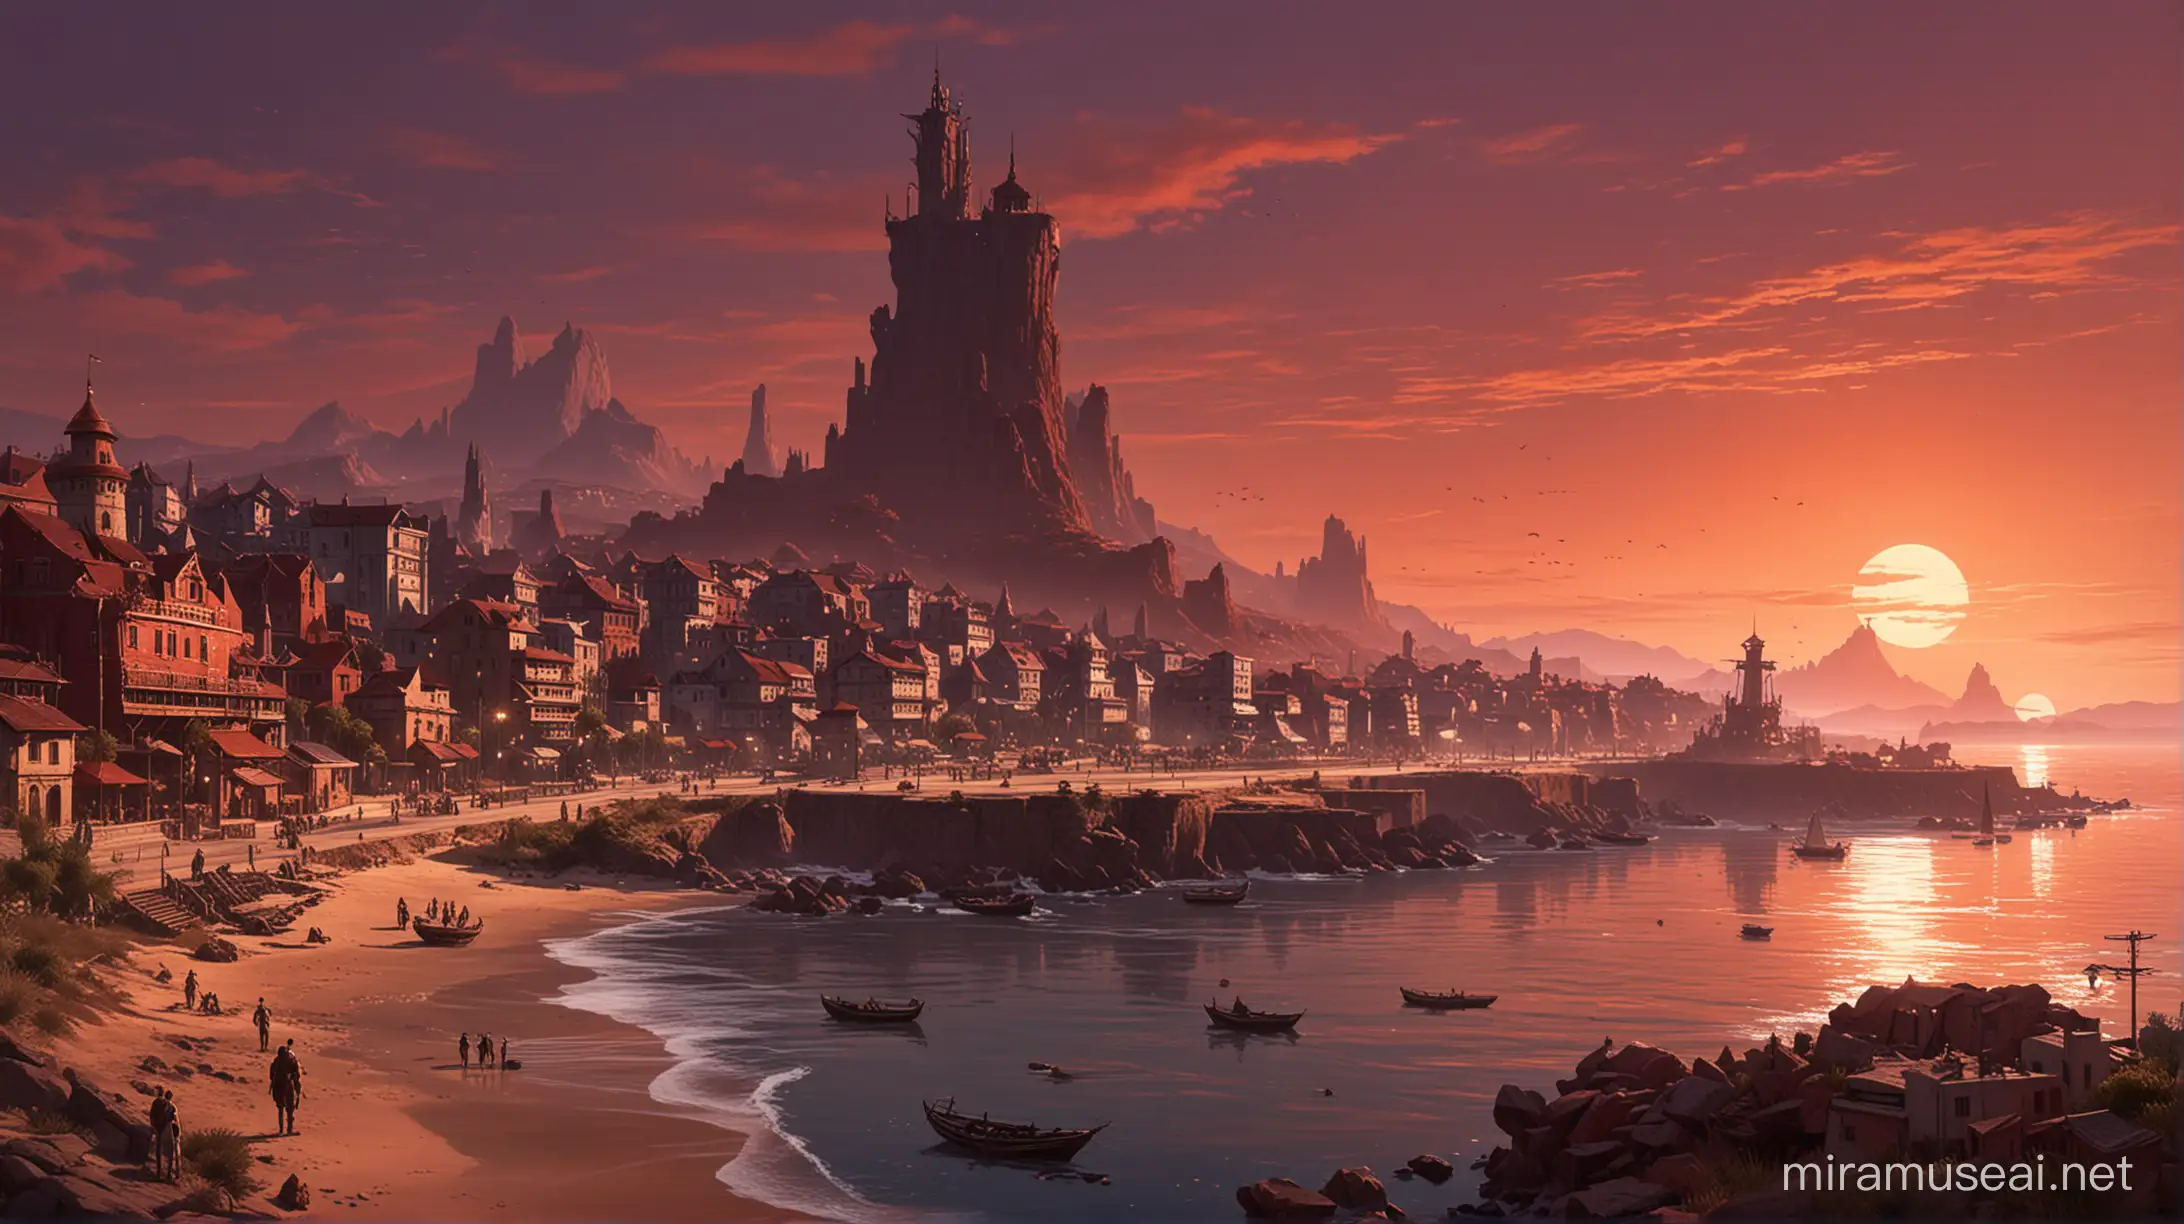 Eberron Dense Cityscape at Dusk with Vibrant Red Sky and Serene Seaside